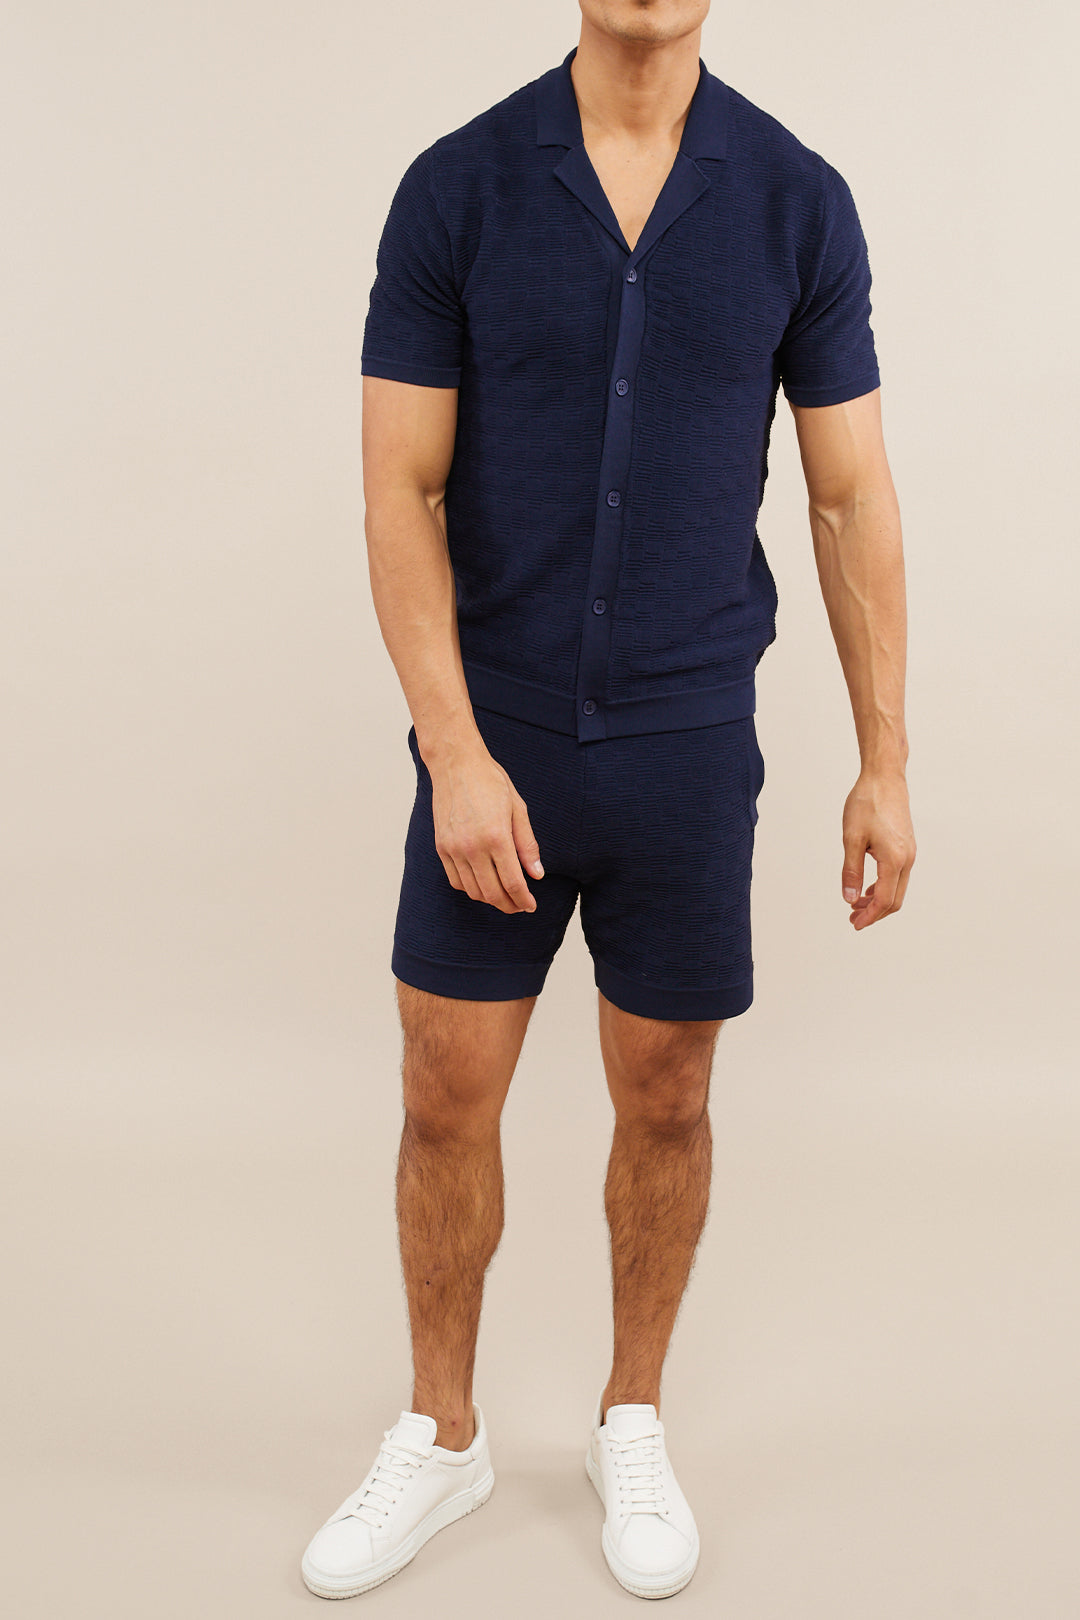 Ezra Knitted Button Down Shirt - Navy